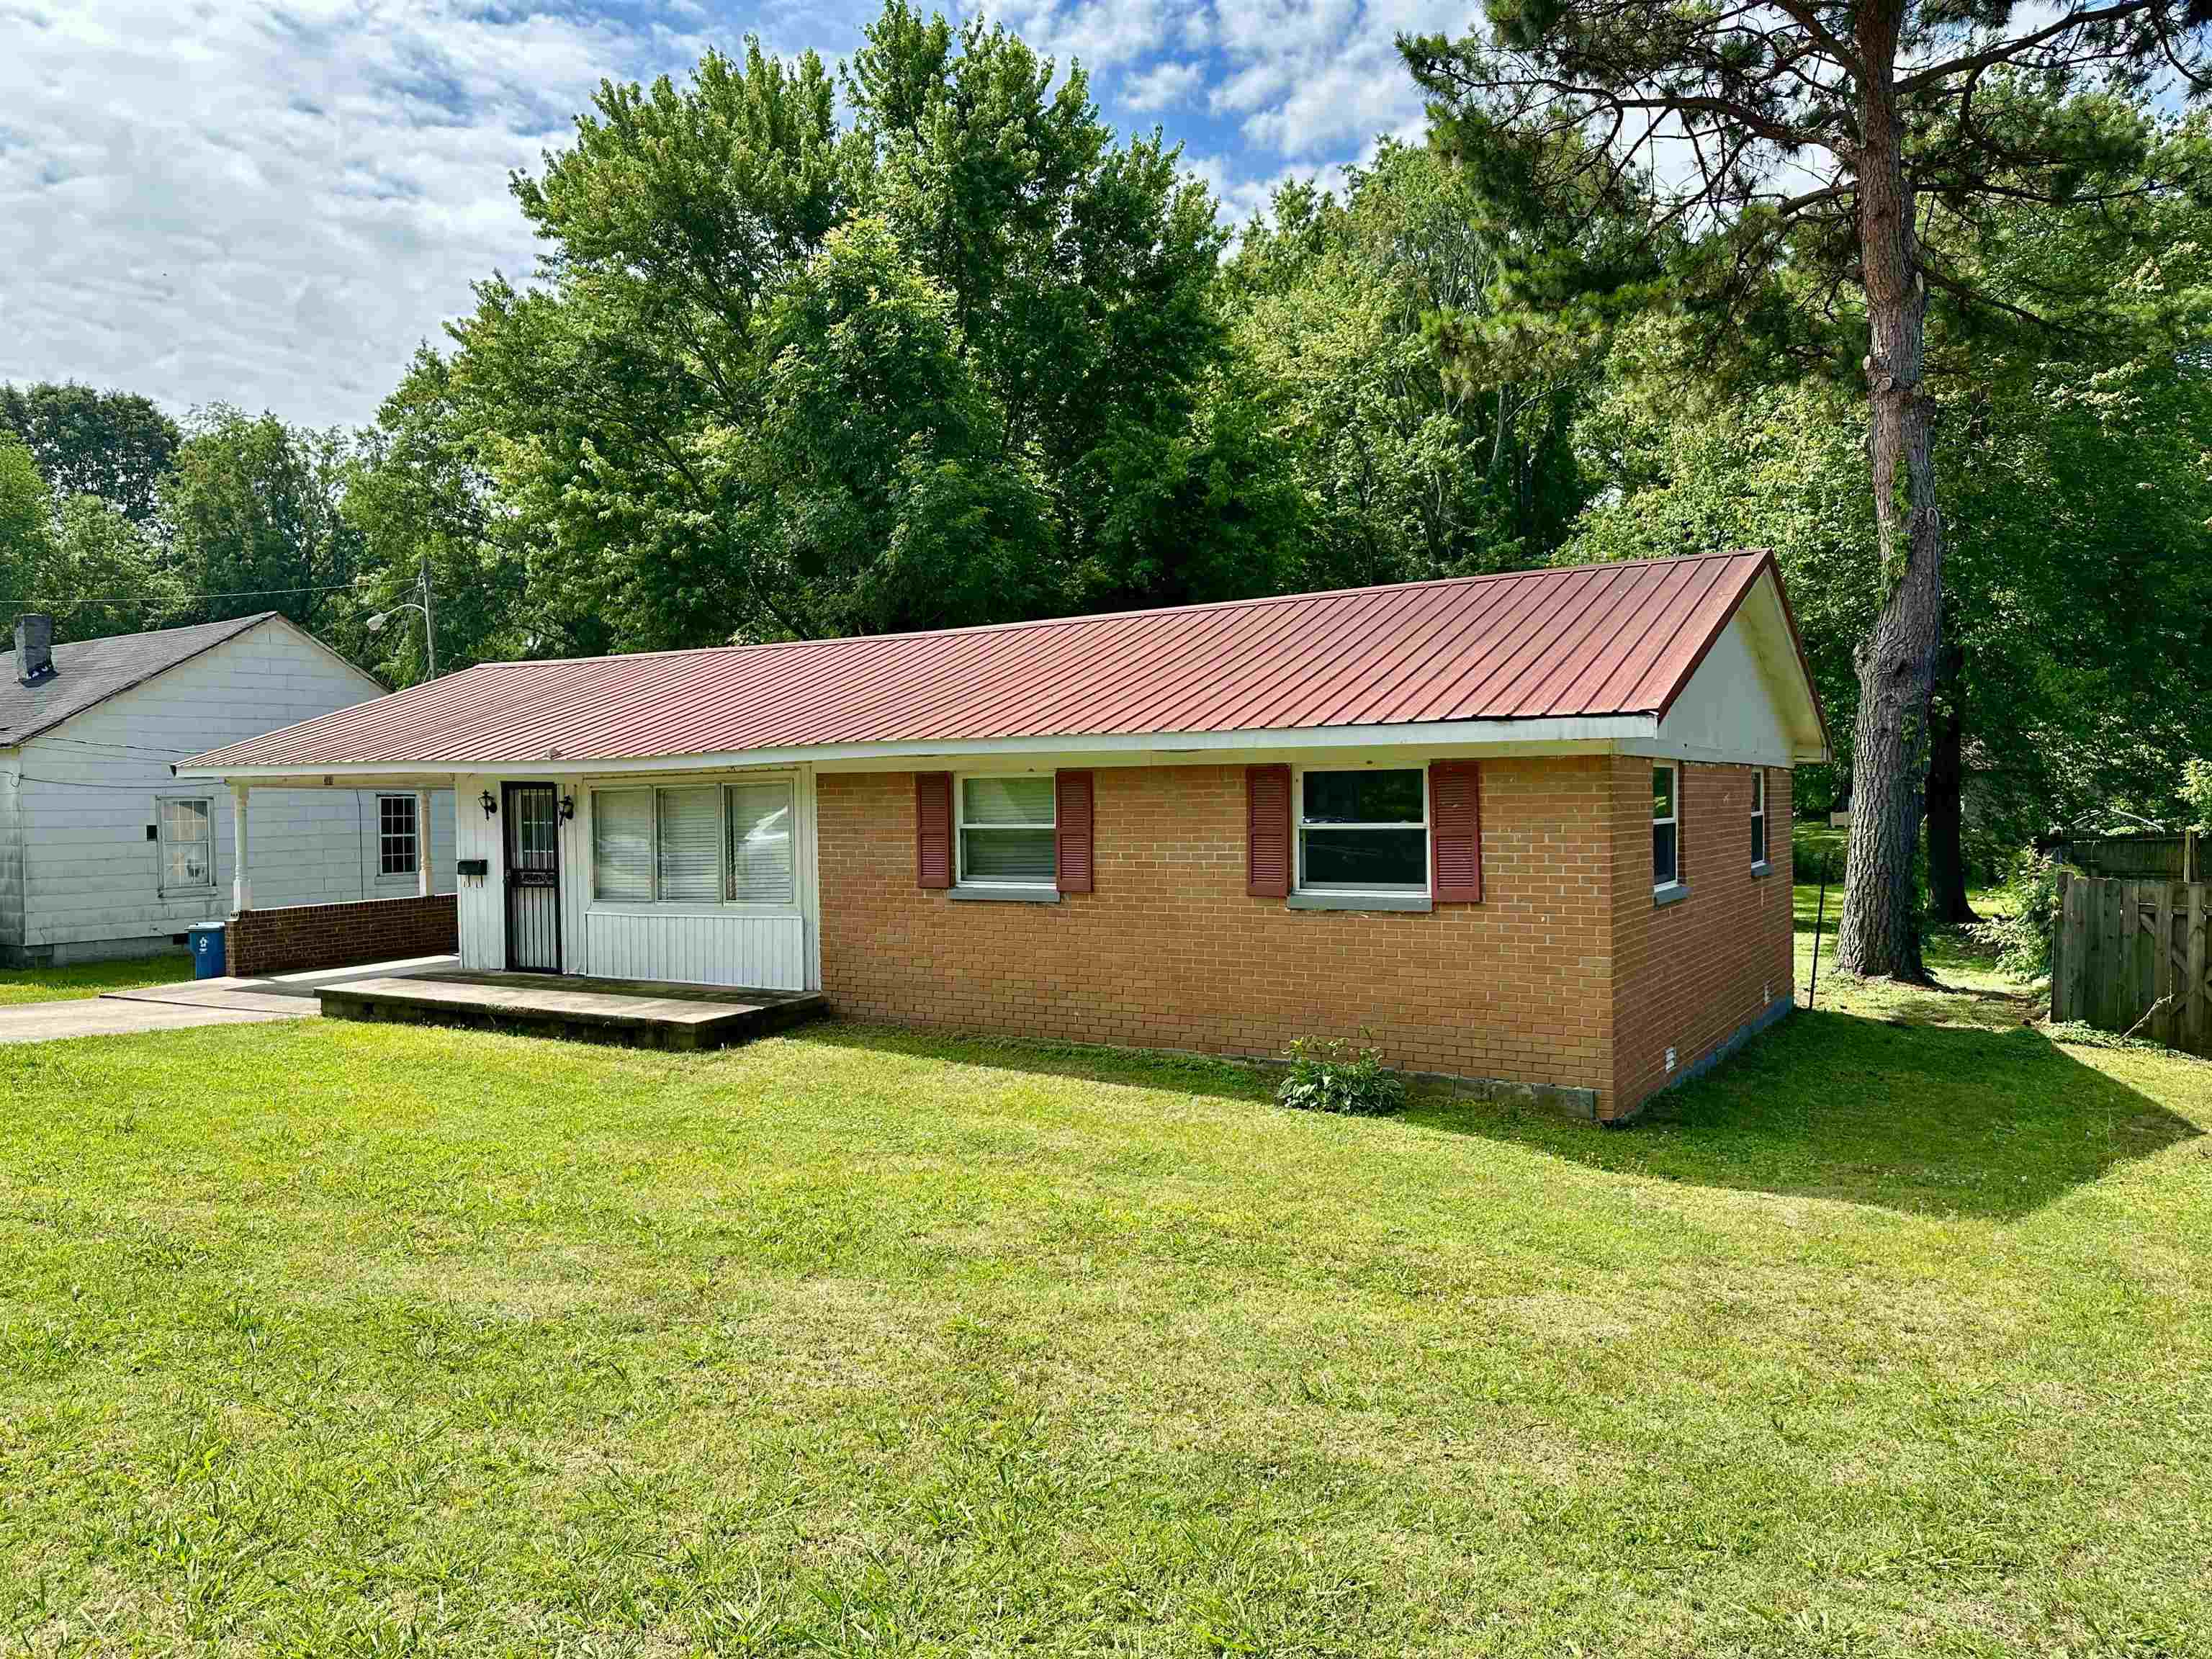 Residential for sale – 309 W 10th   Trenton, TN